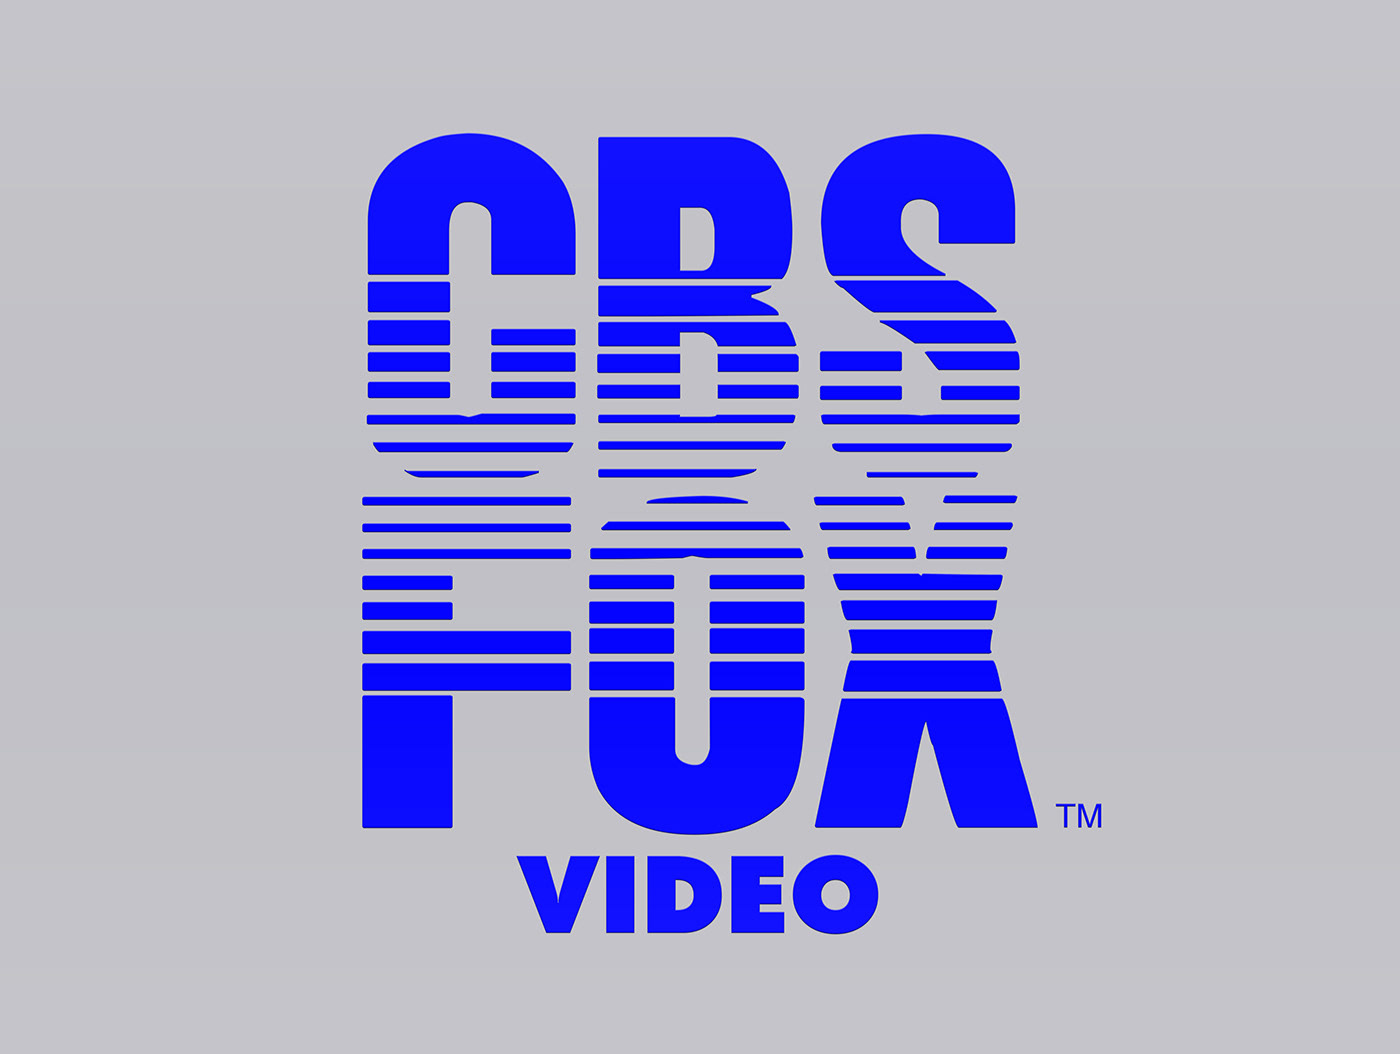 openings CBS Fox Video logos